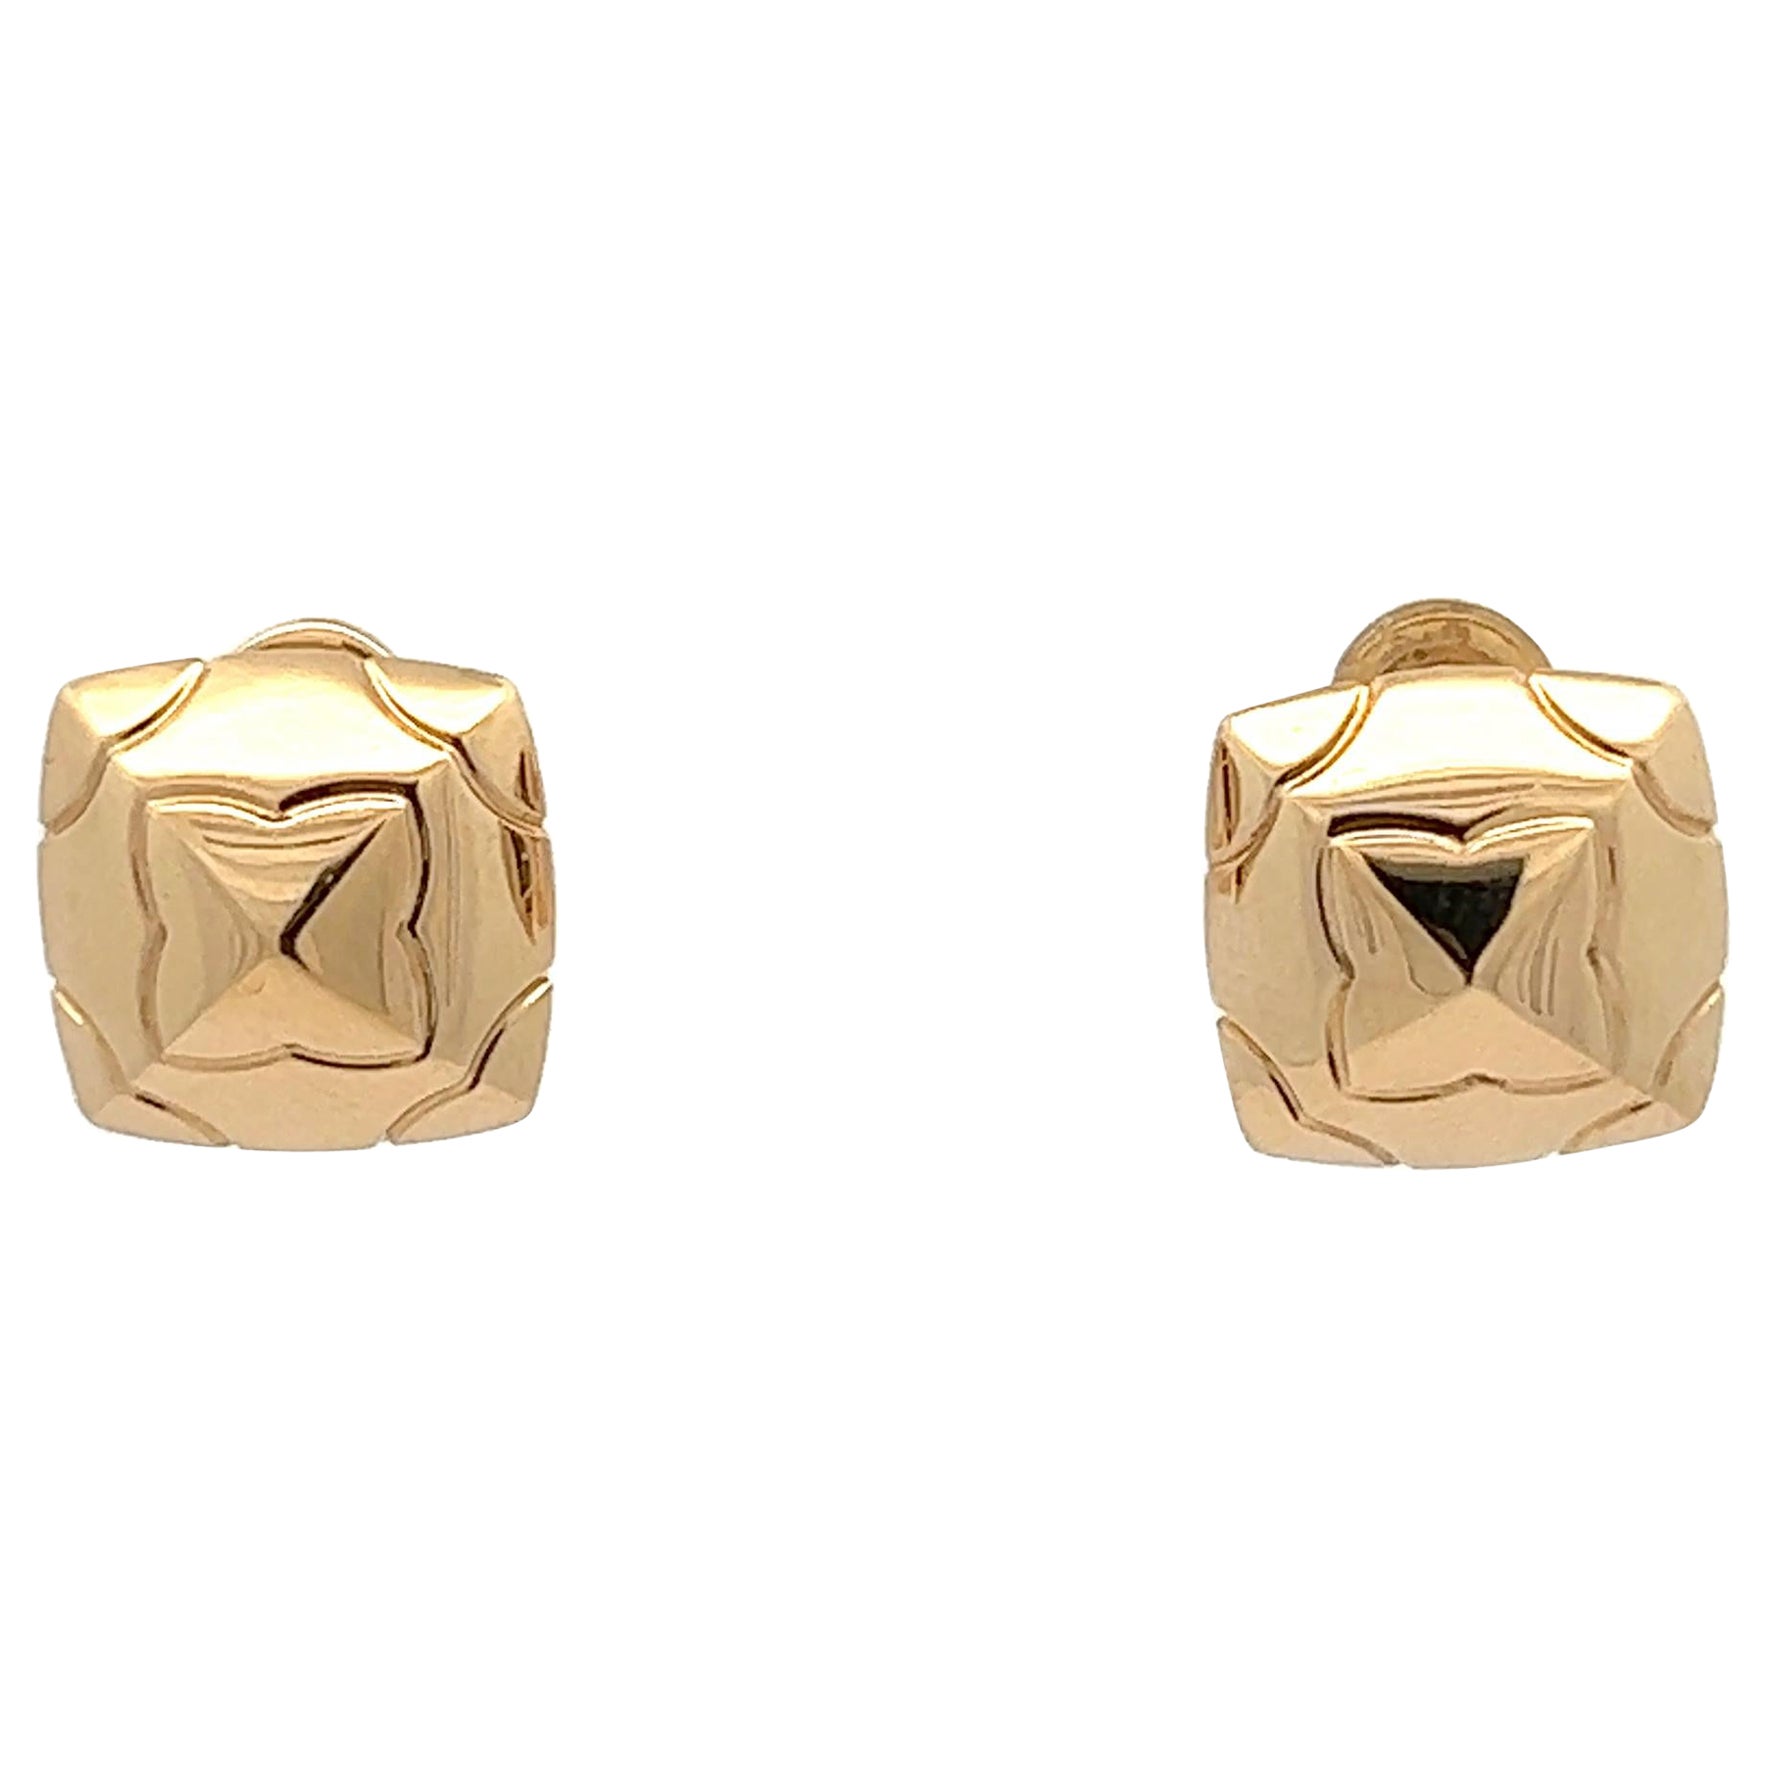 A pair of 18k yellow gold "Pyramid" ear clips by Bulgari.